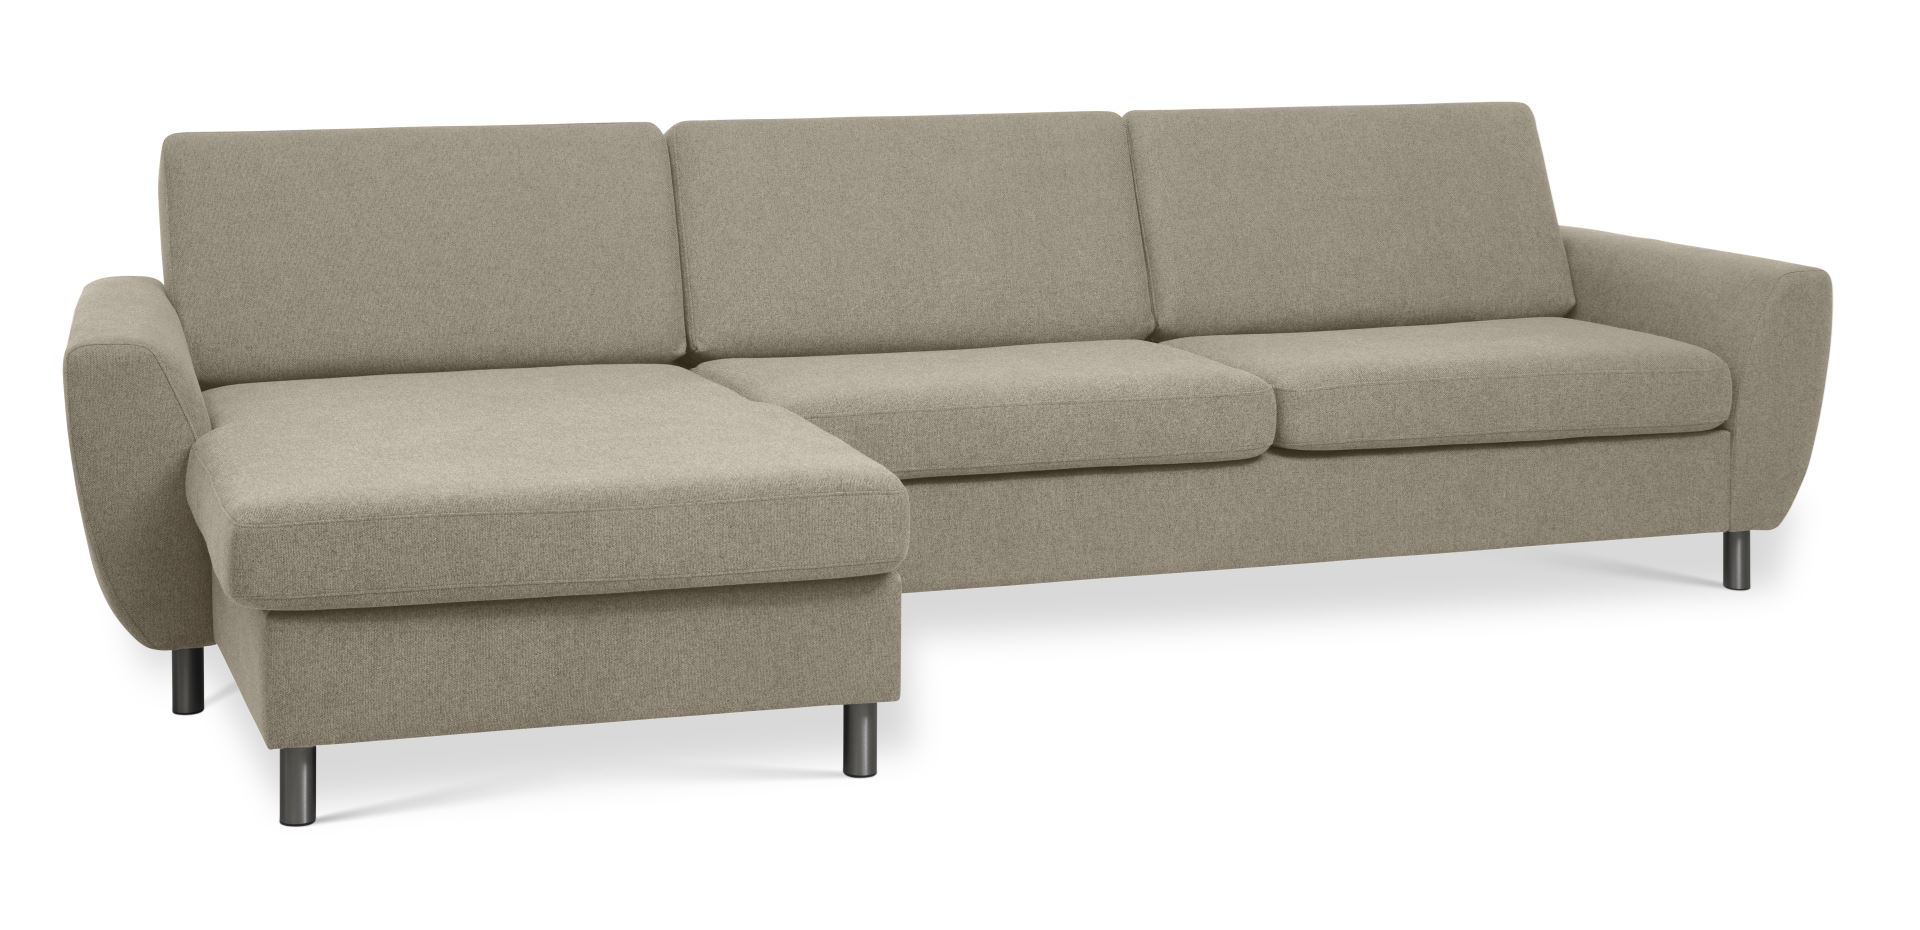 Wendy set 8 3D XL sofa, m. chaiselong - antelope beige polyester stof og børstet aluminium